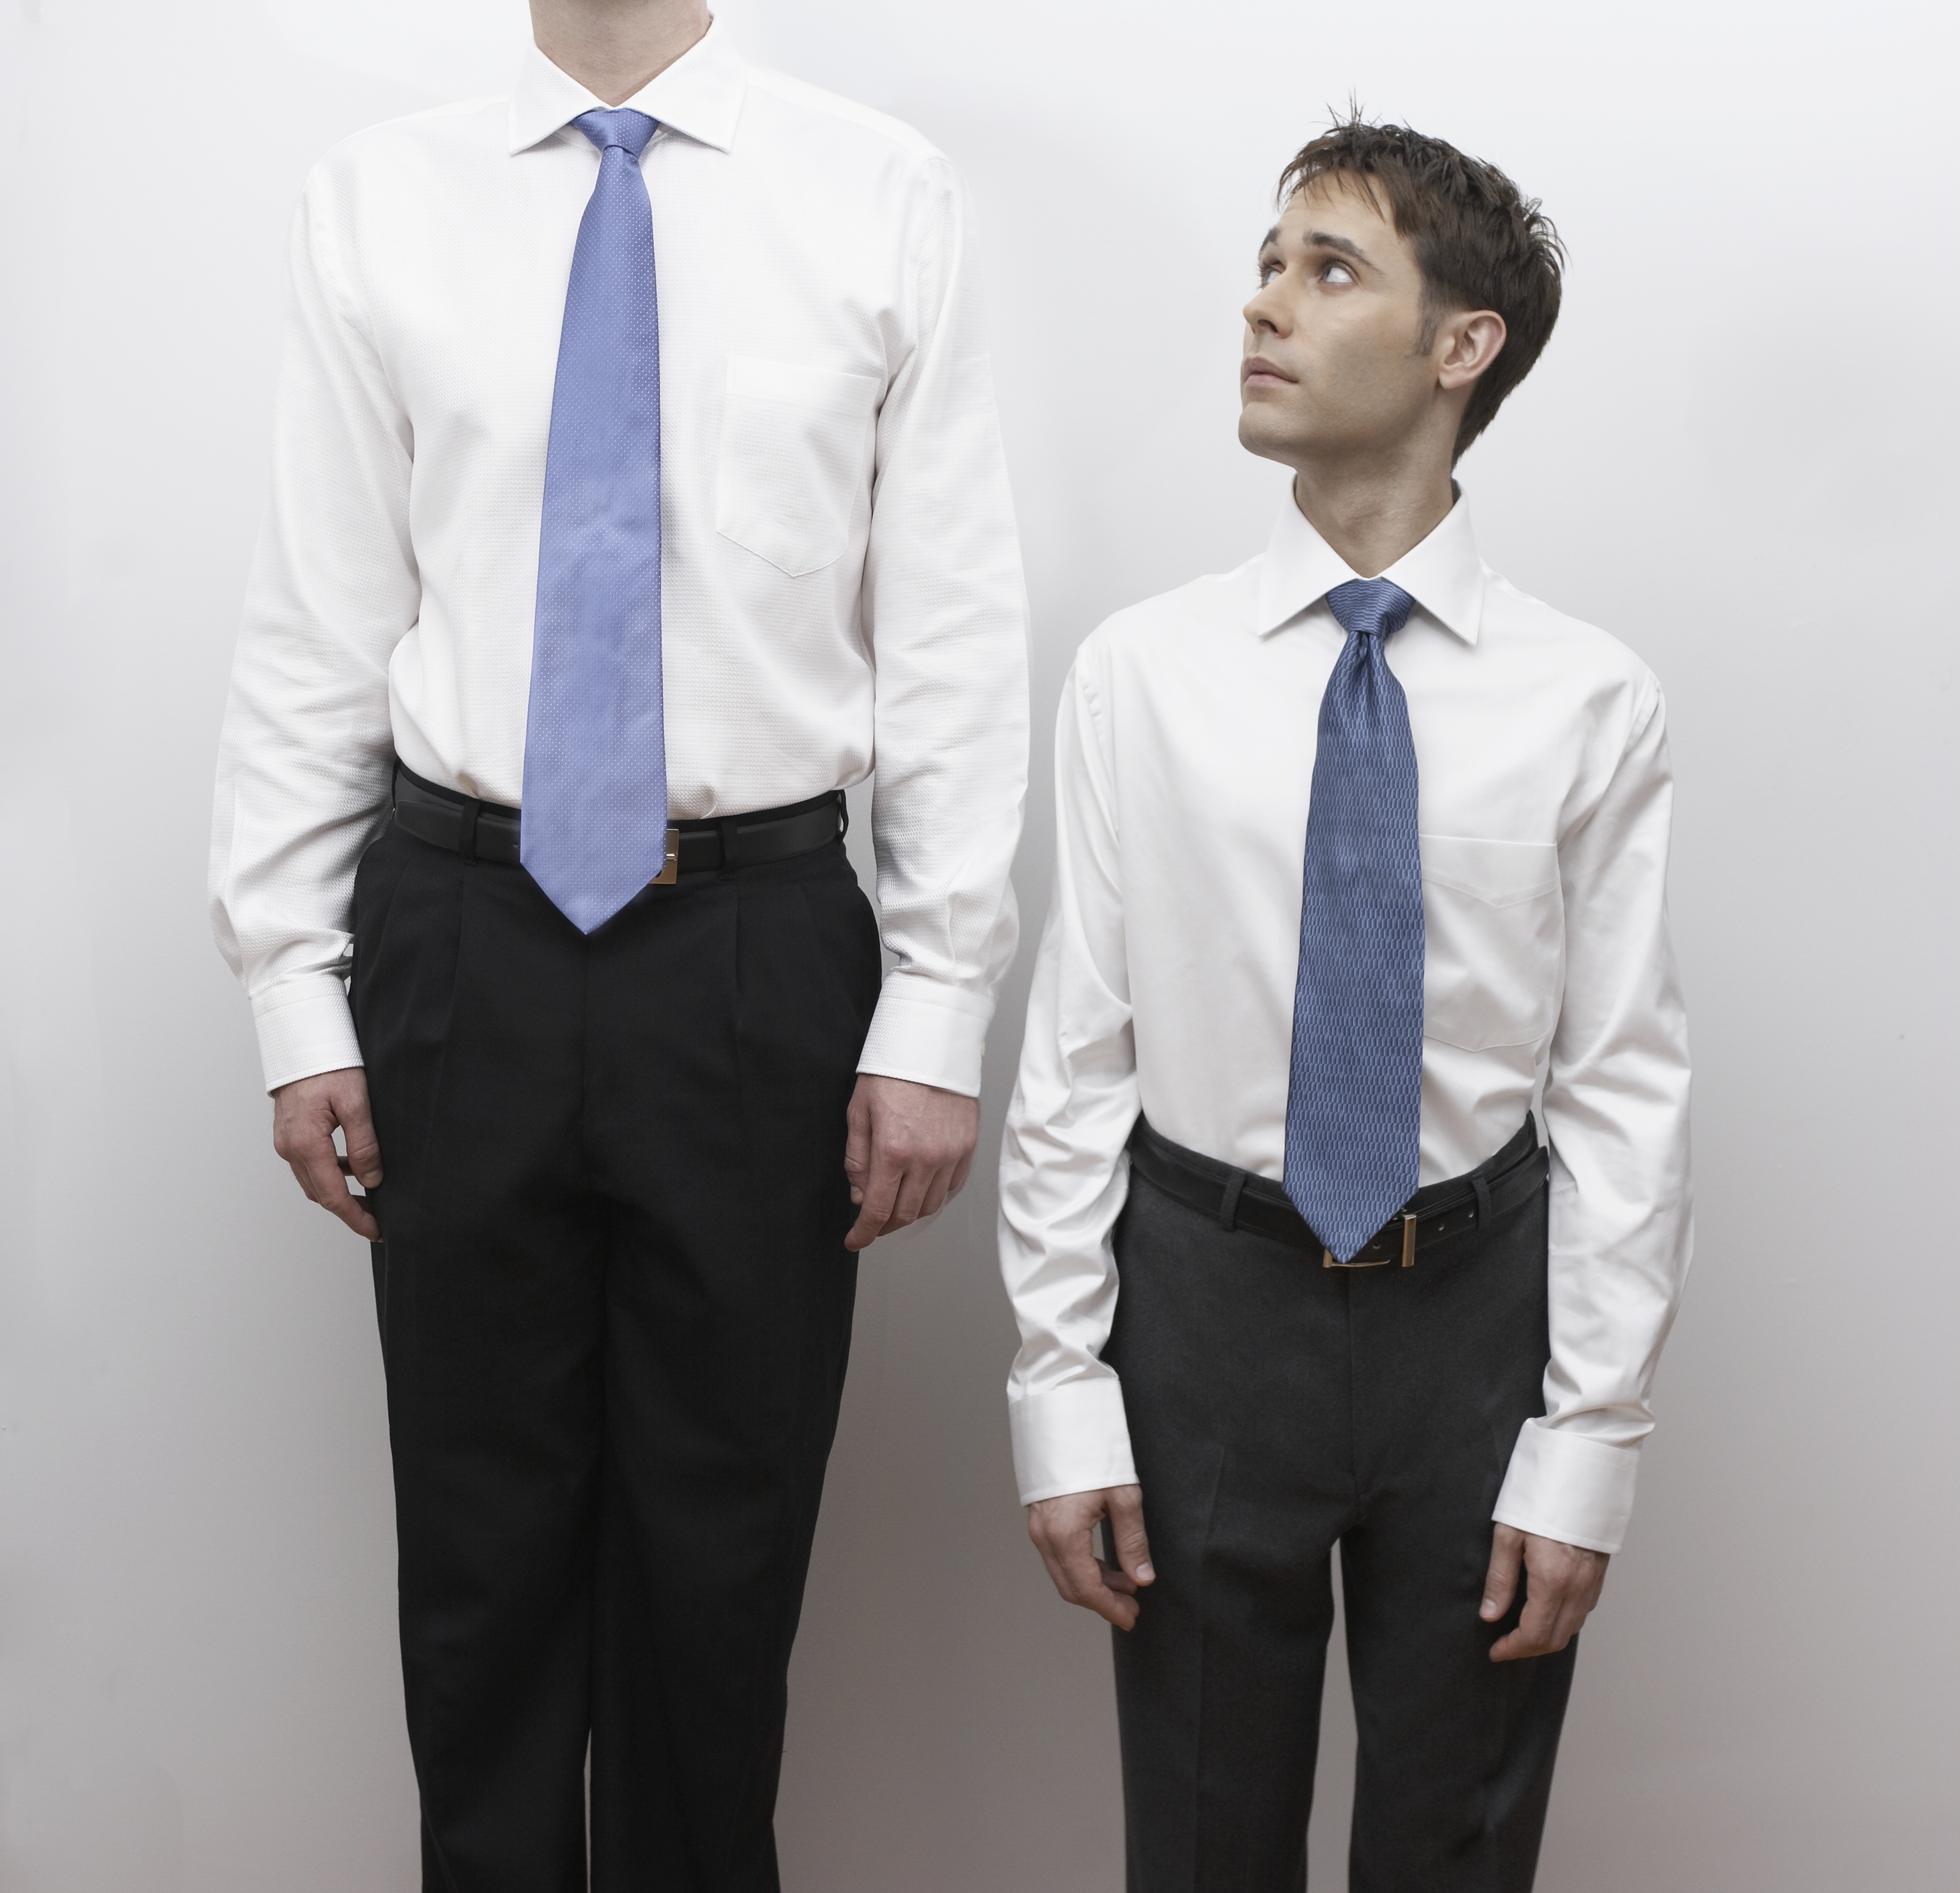 Short business man standing next to tall man (Roy Hsu—Getty Images/Uppercut)